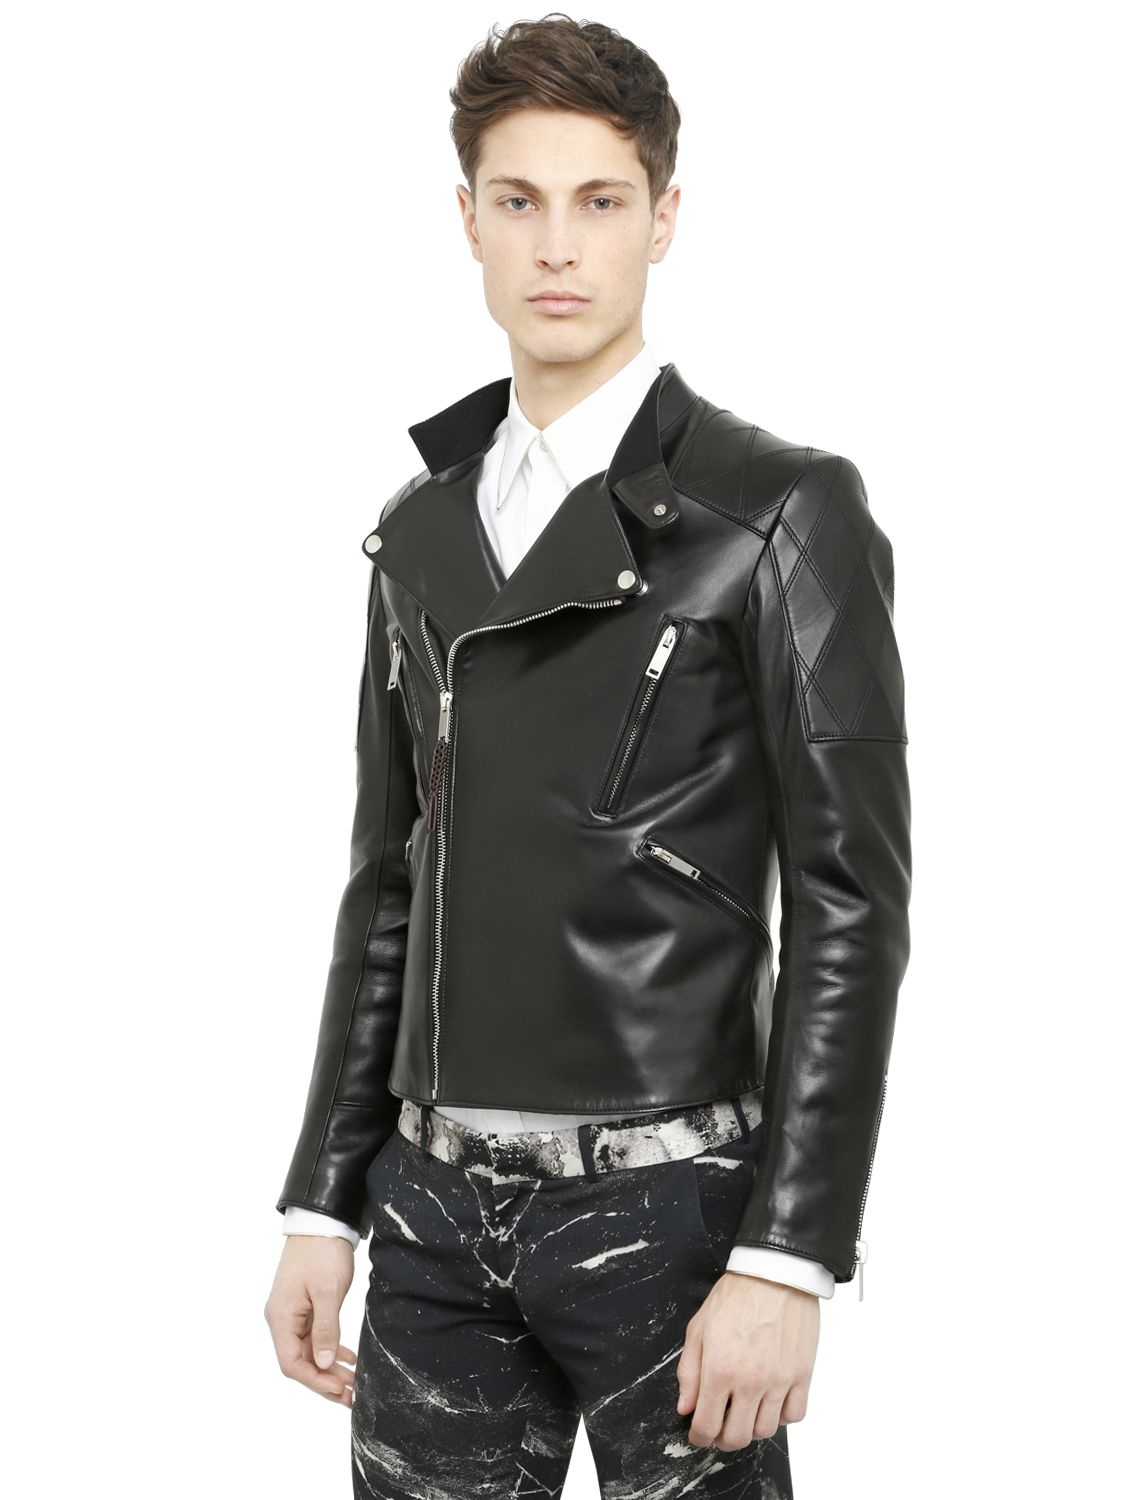 Alexander McQueen Laser Cut Skull Biker Leather Jacket in Black for Men -  Lyst